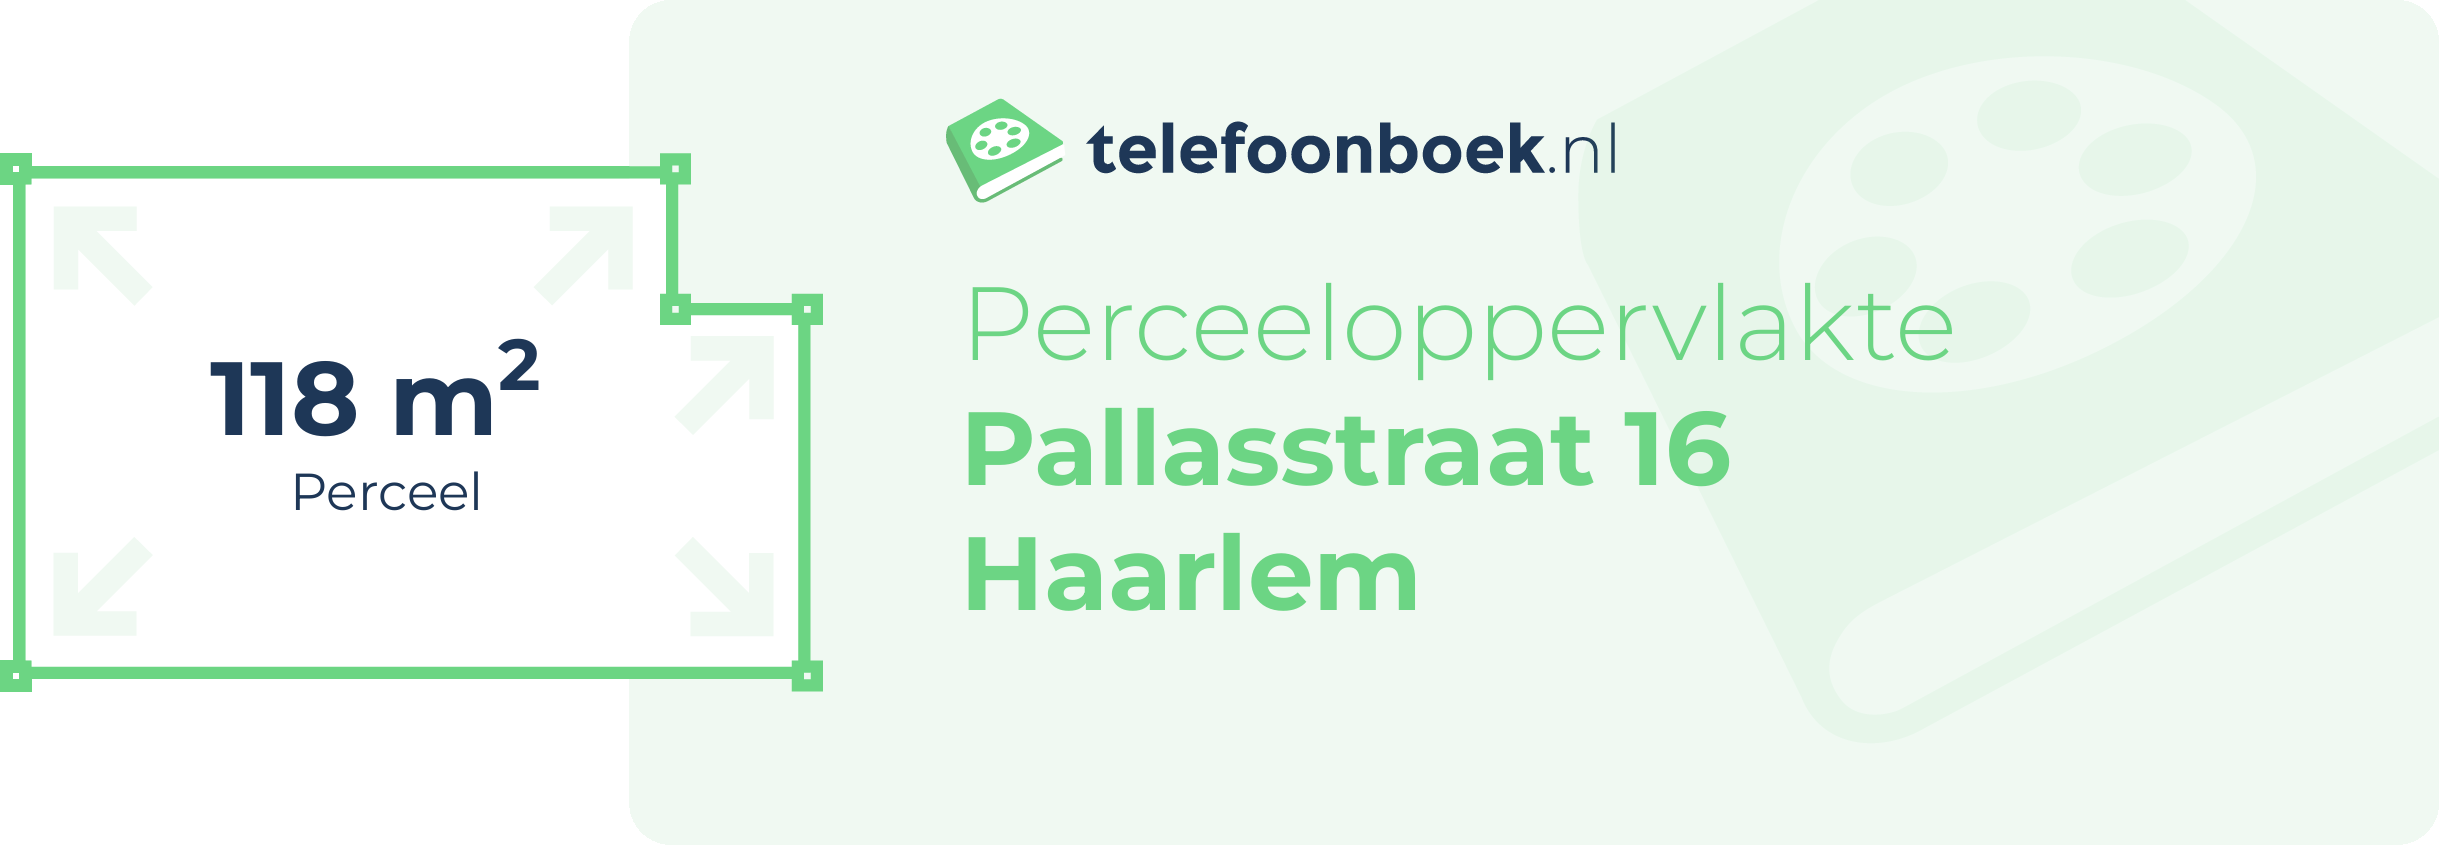 Perceeloppervlakte Pallasstraat 16 Haarlem